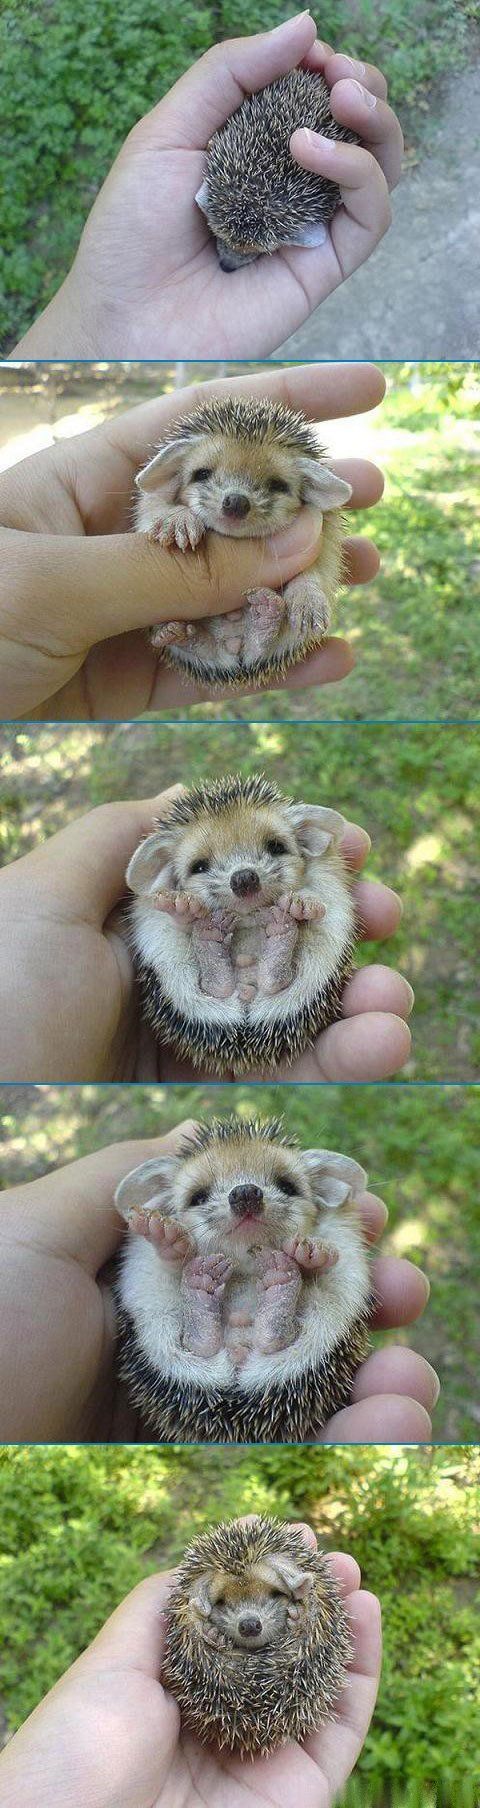 Baby hedgehog!